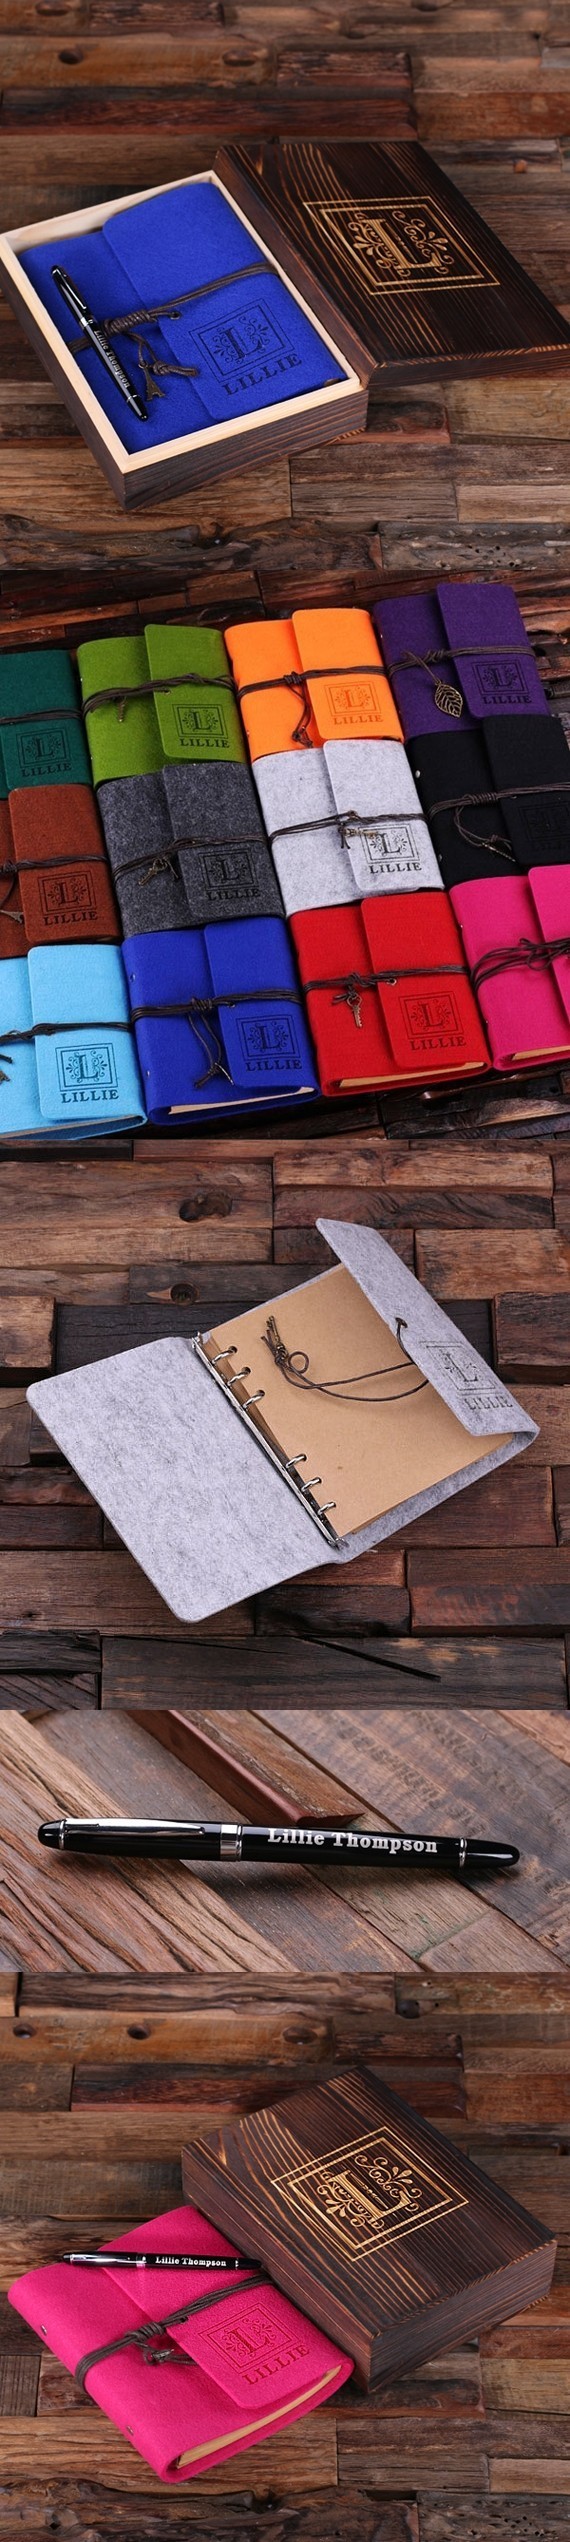 Personalized Felt Journal, Pen and Keepsake Wood Box Set (12 Colors)